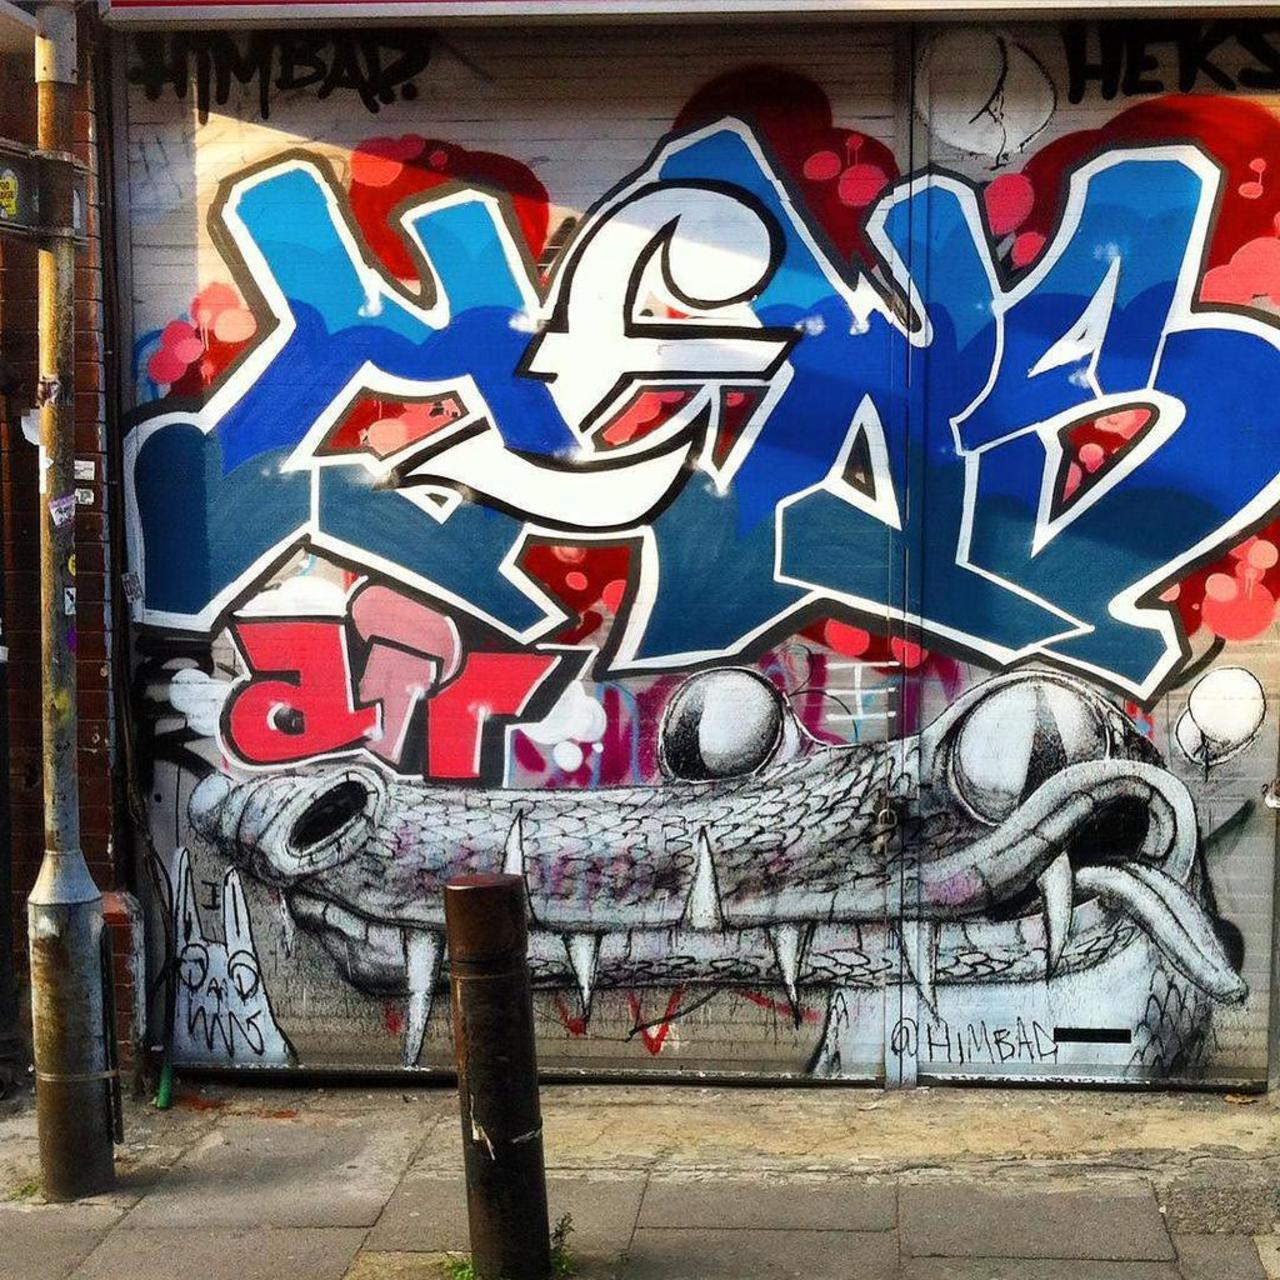 Art by Himbad  #Graffiti #StreetArt #UrbanArt #Himbad #FashionStreet #Shoreditch #London #iPhone4 #tv_streetart #r… http://t.co/UPZbsiYTnR